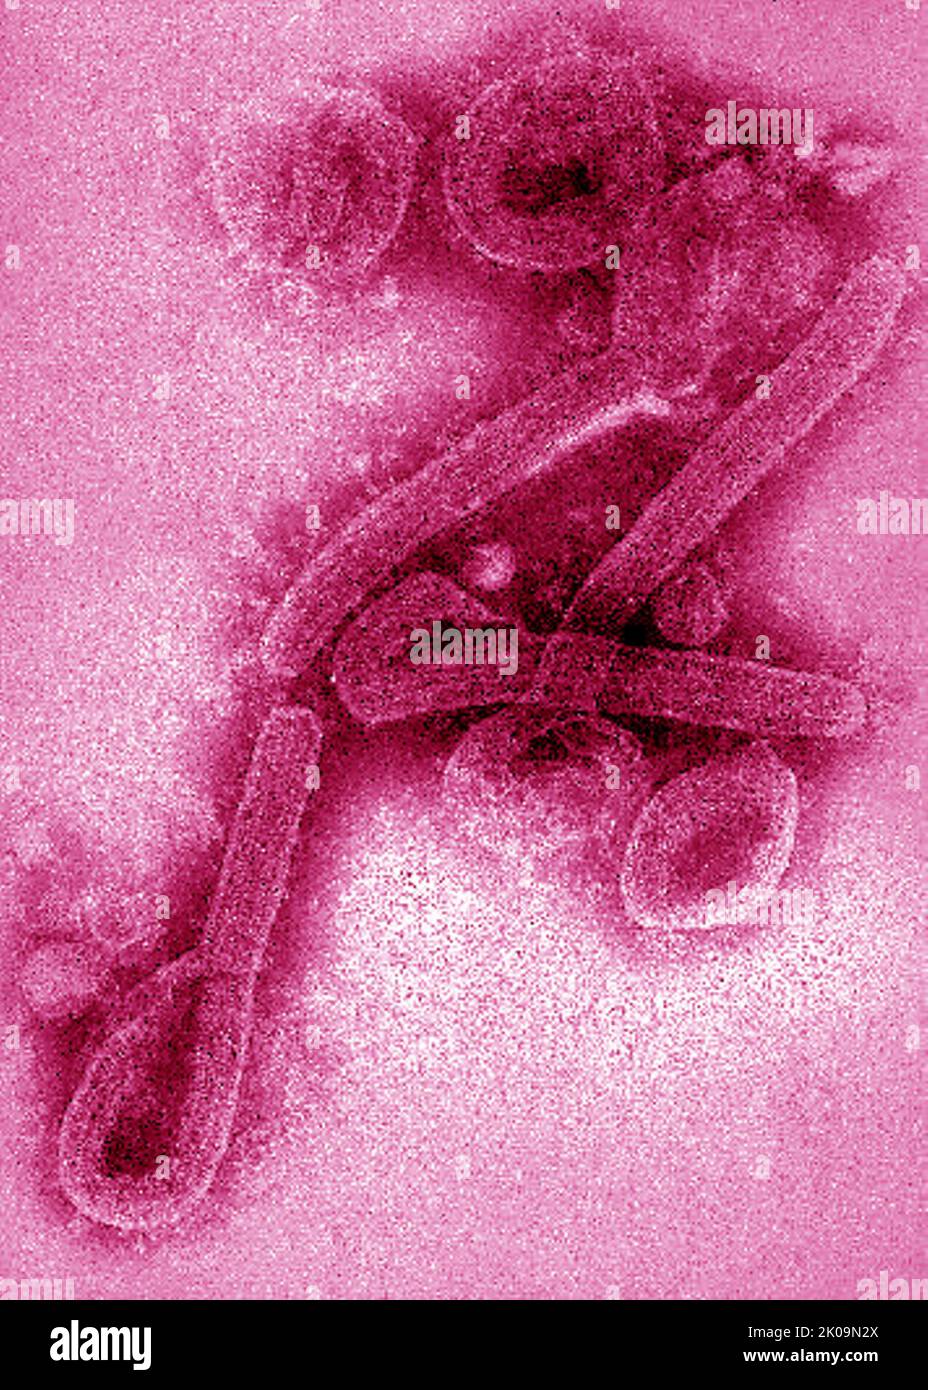 Transmission electron microscopic (TEM) image of Marburg virus virions. Stock Photo